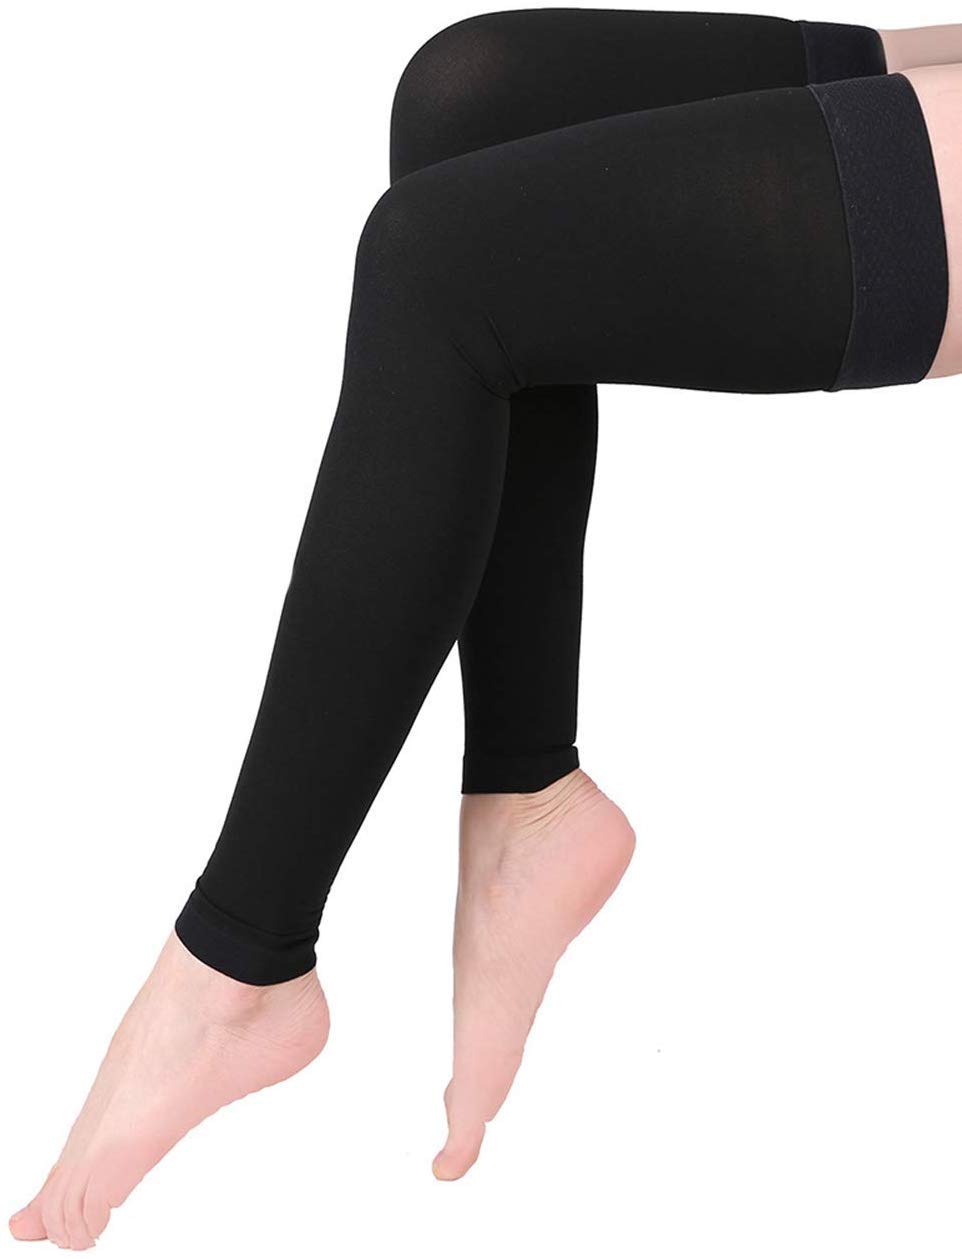 KEKING® Thigh High Compression Stockings Footless, Unisex, 15-20mmHg ...